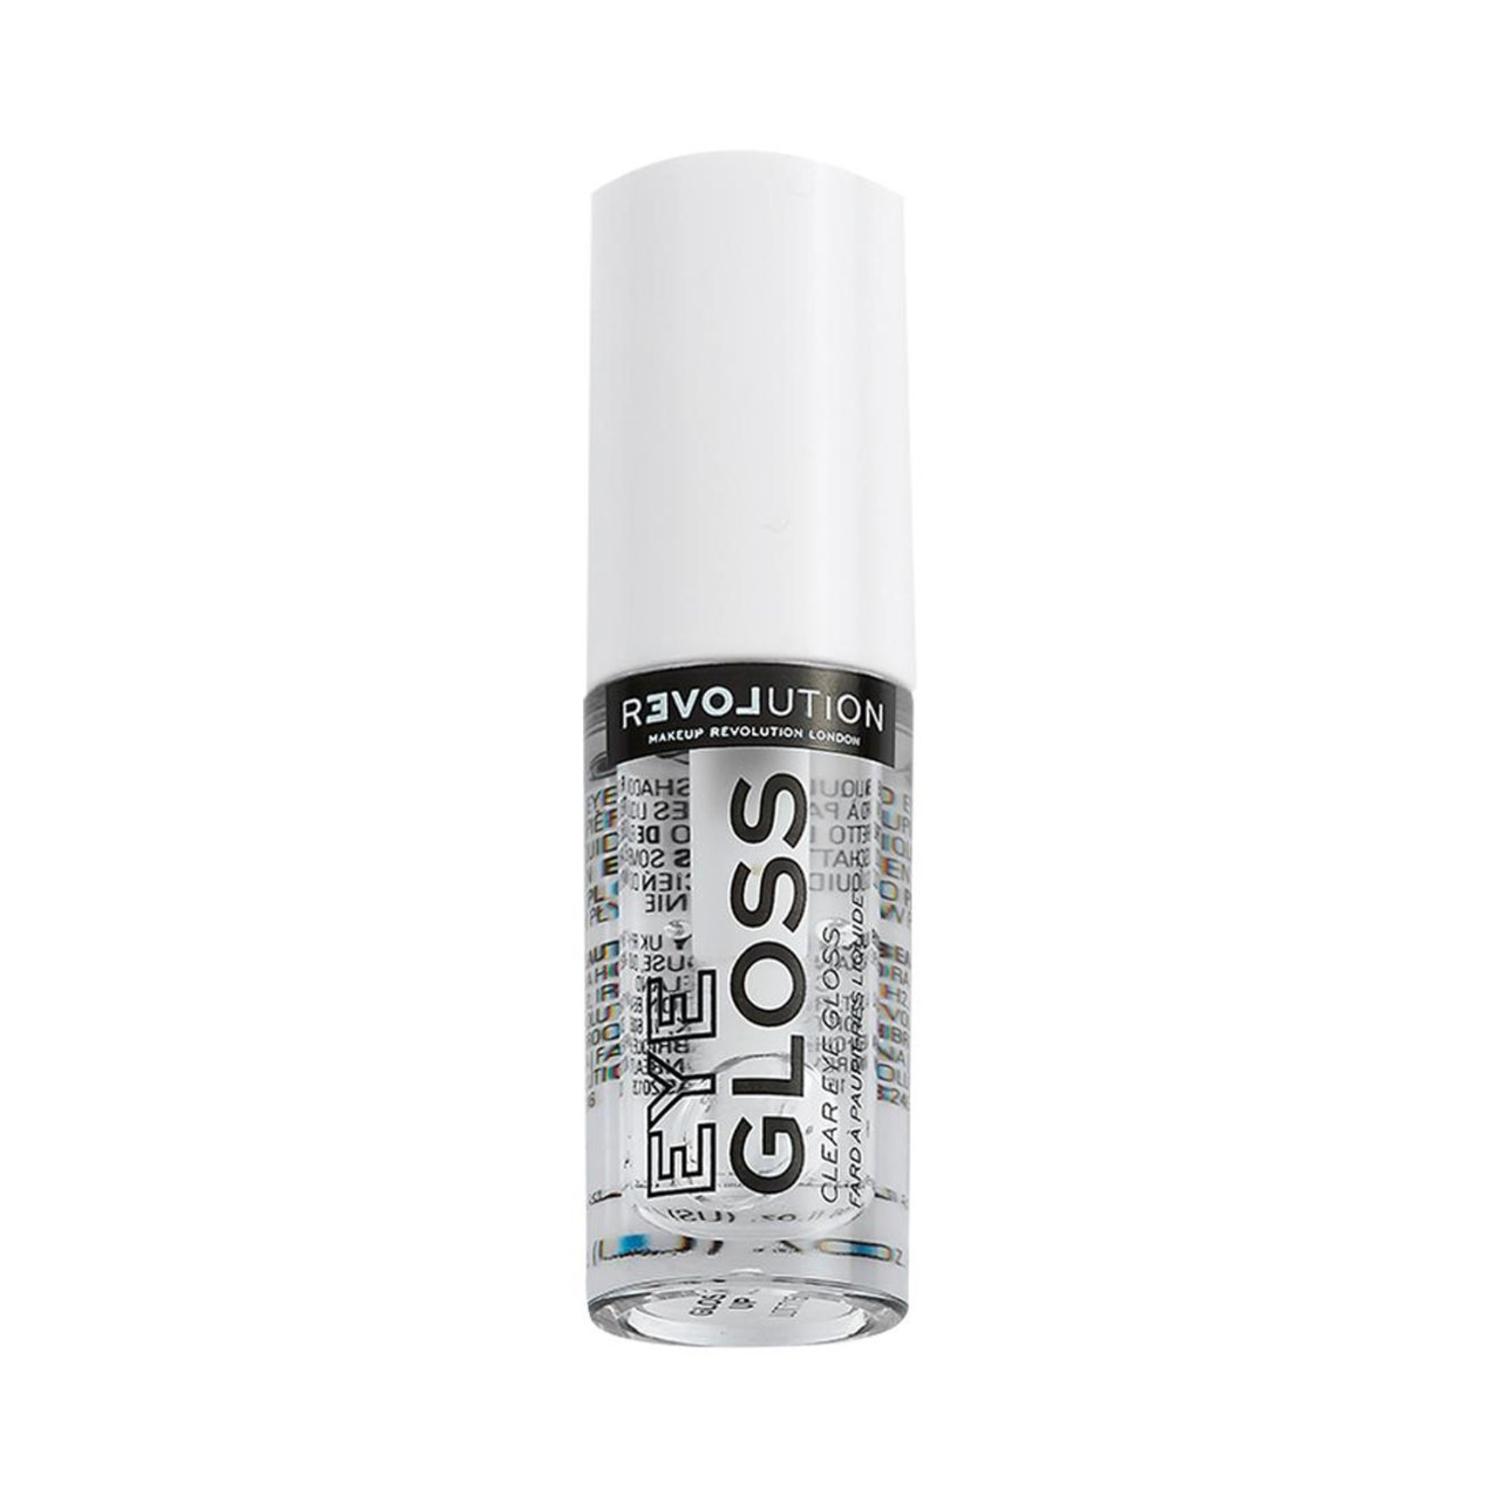 makeup revolution remove gloss up eye gloss - transparent (1.9ml)